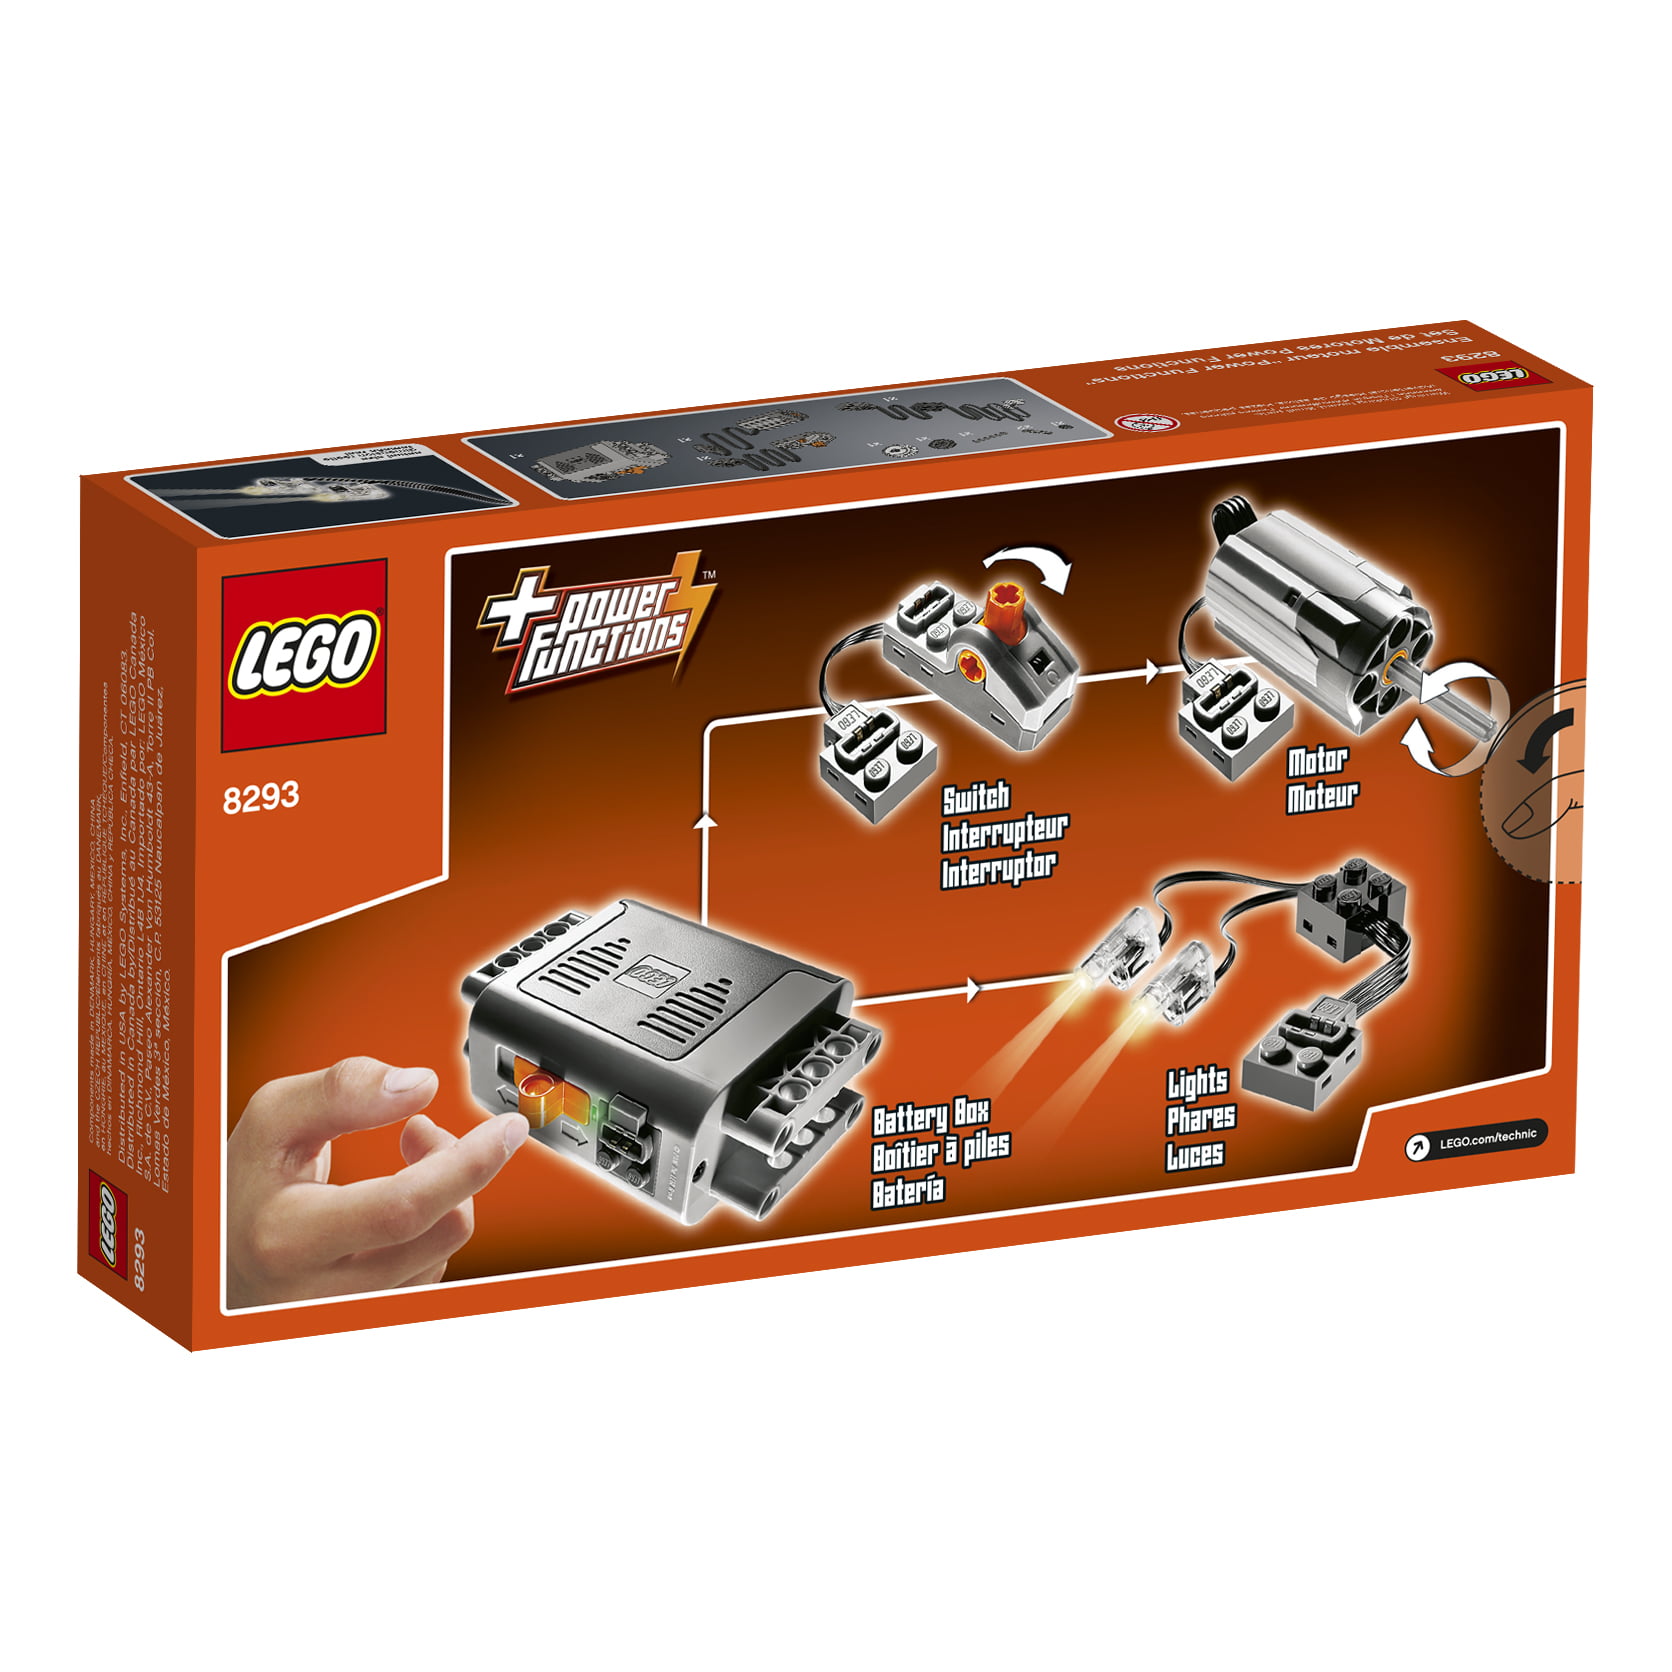 Og så videre arsenal idiom LEGO Technic Power Functions Motor Set 8293 - Walmart.com